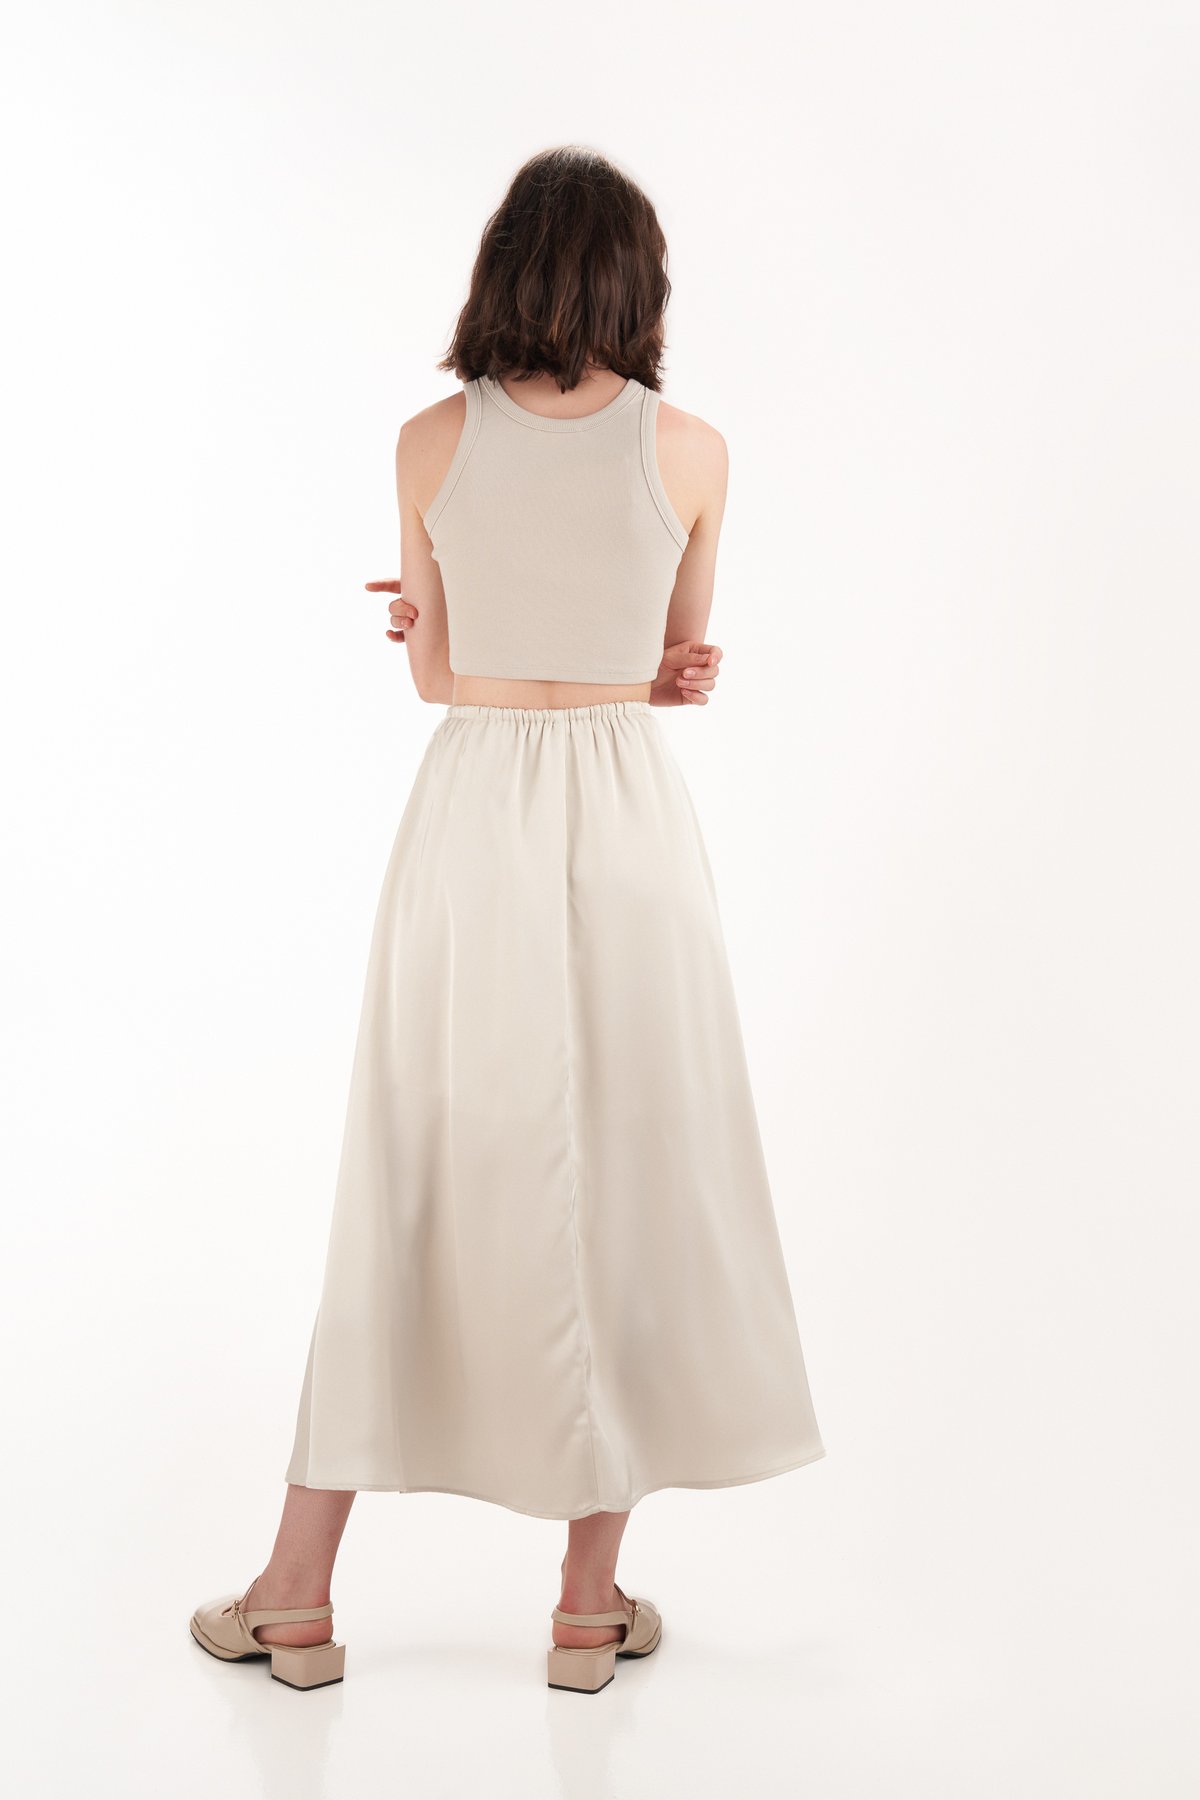 Lenne Satin Skirt in Pearl Grey